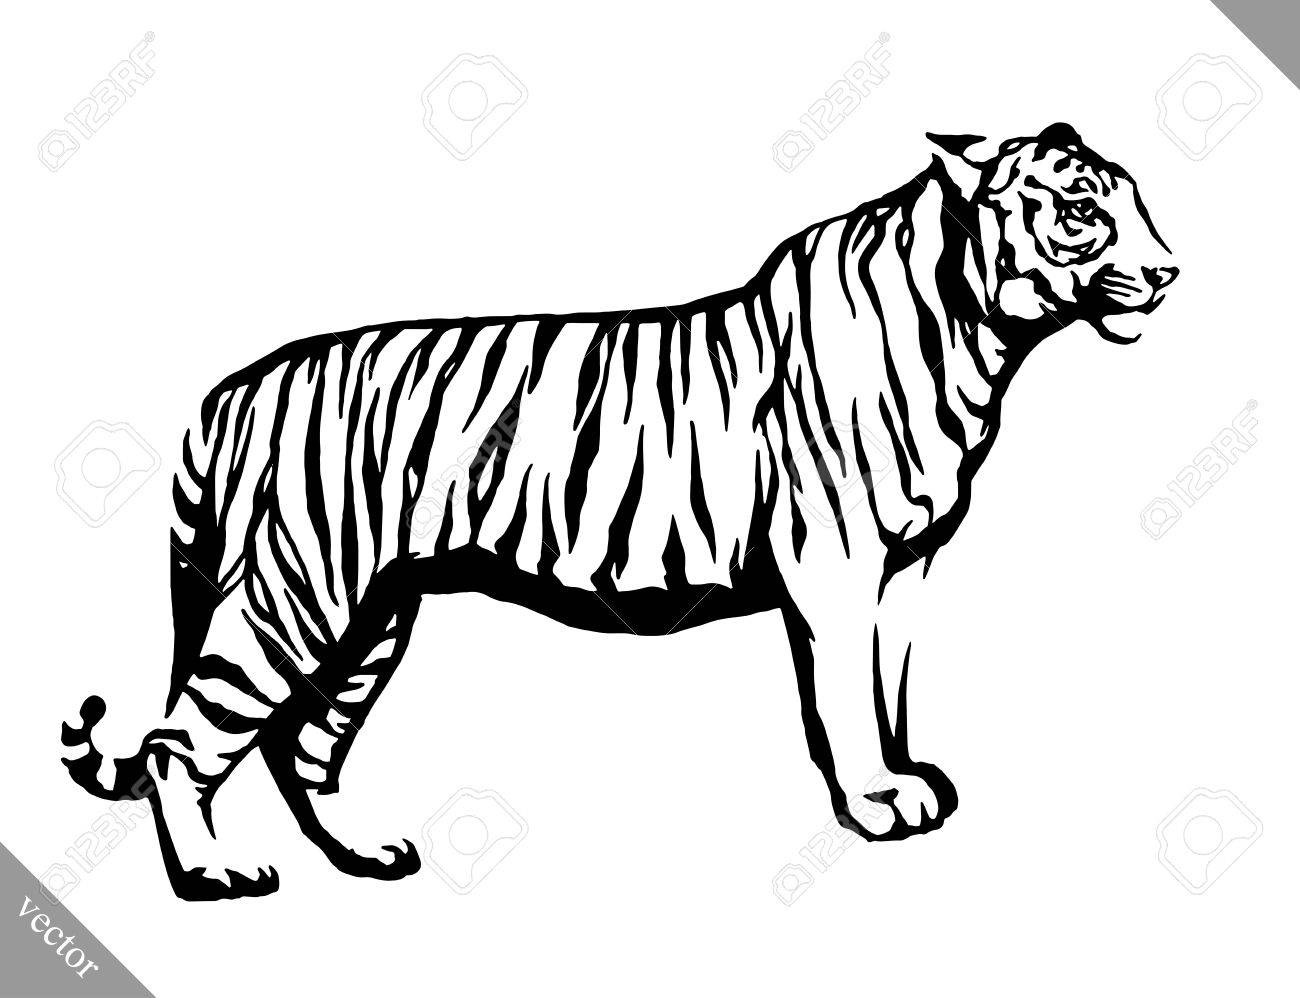 Как нарисовать тигра каранда�шом поэтапно